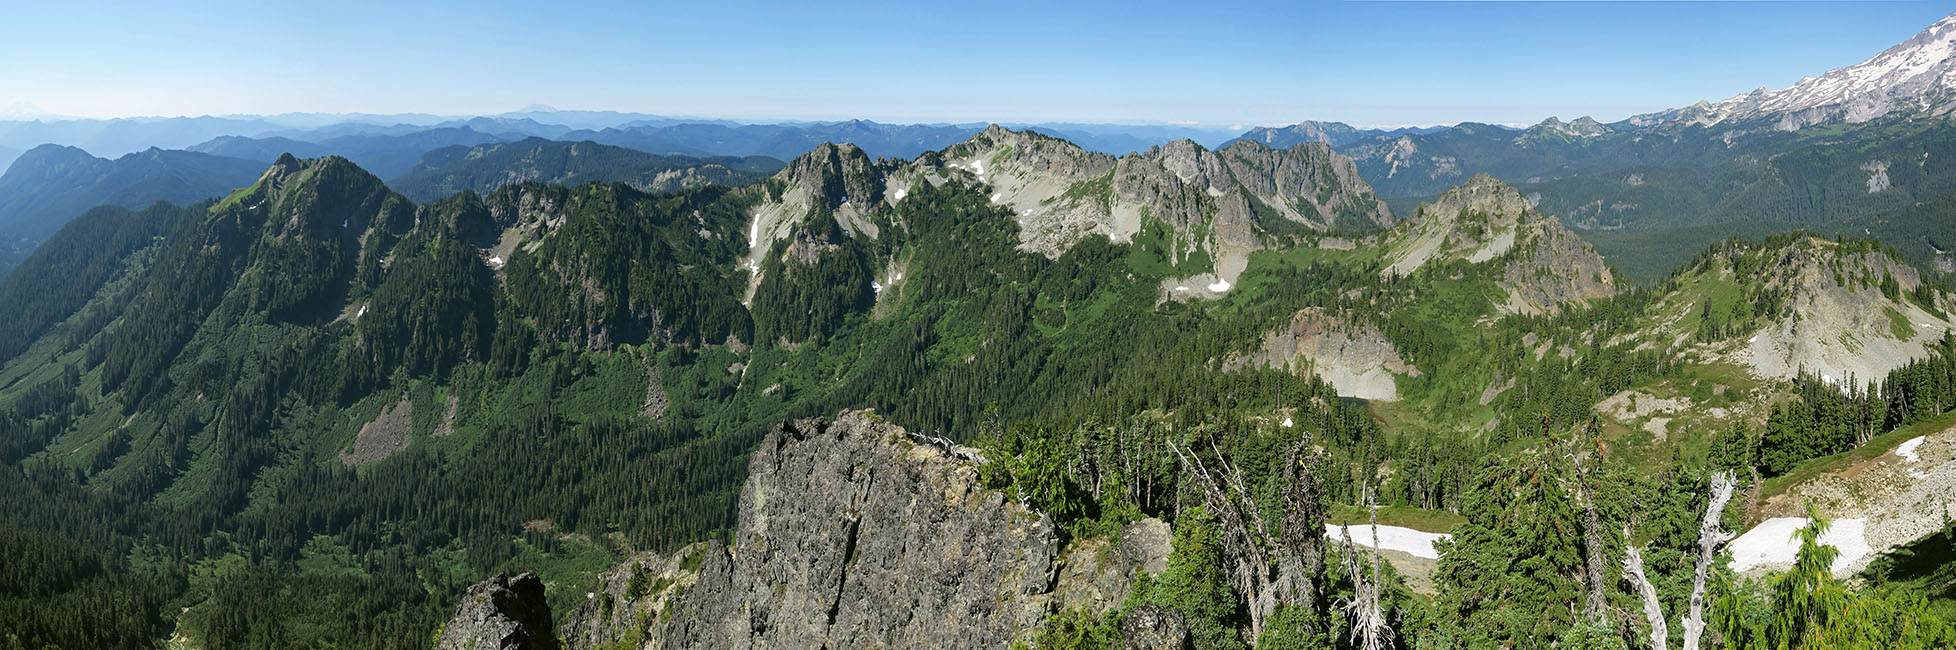 western Tatoosh Range panorama [Plummer Peak, Mt. Rainier National Park, Lewis County, Washington]